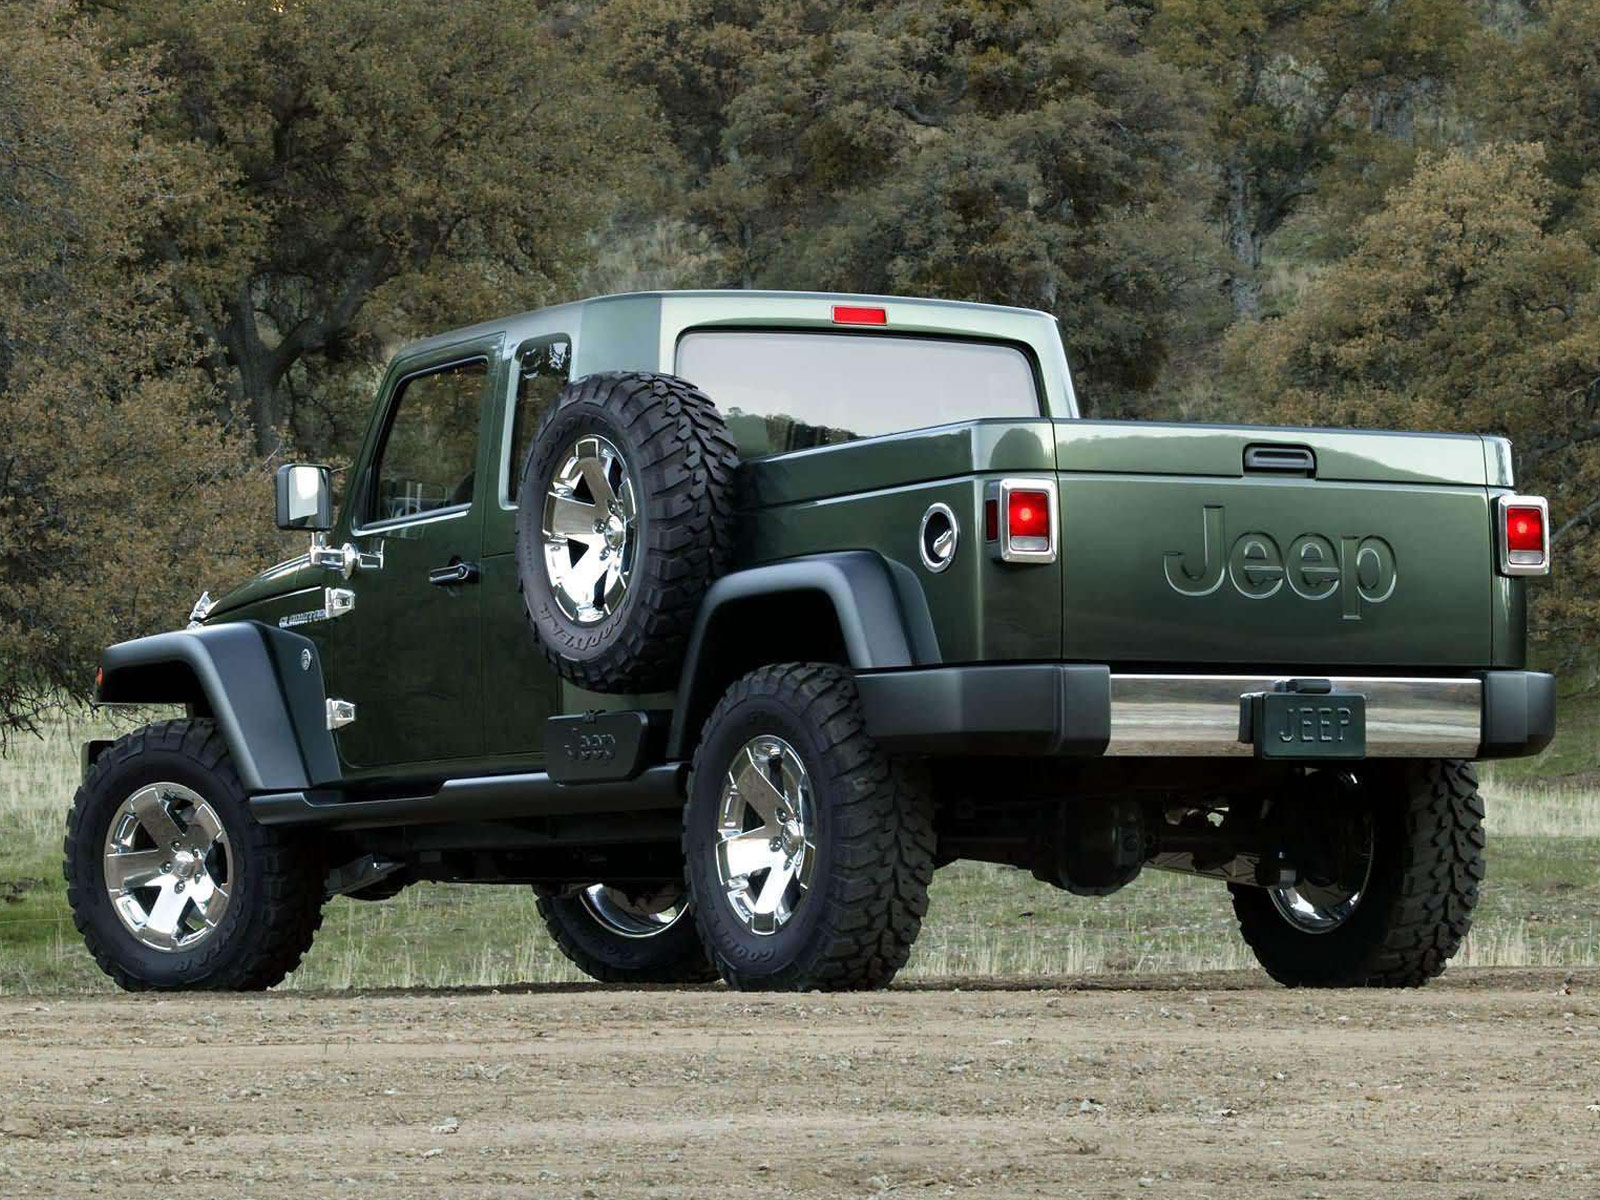 2005 Jeep gladiator concept #2